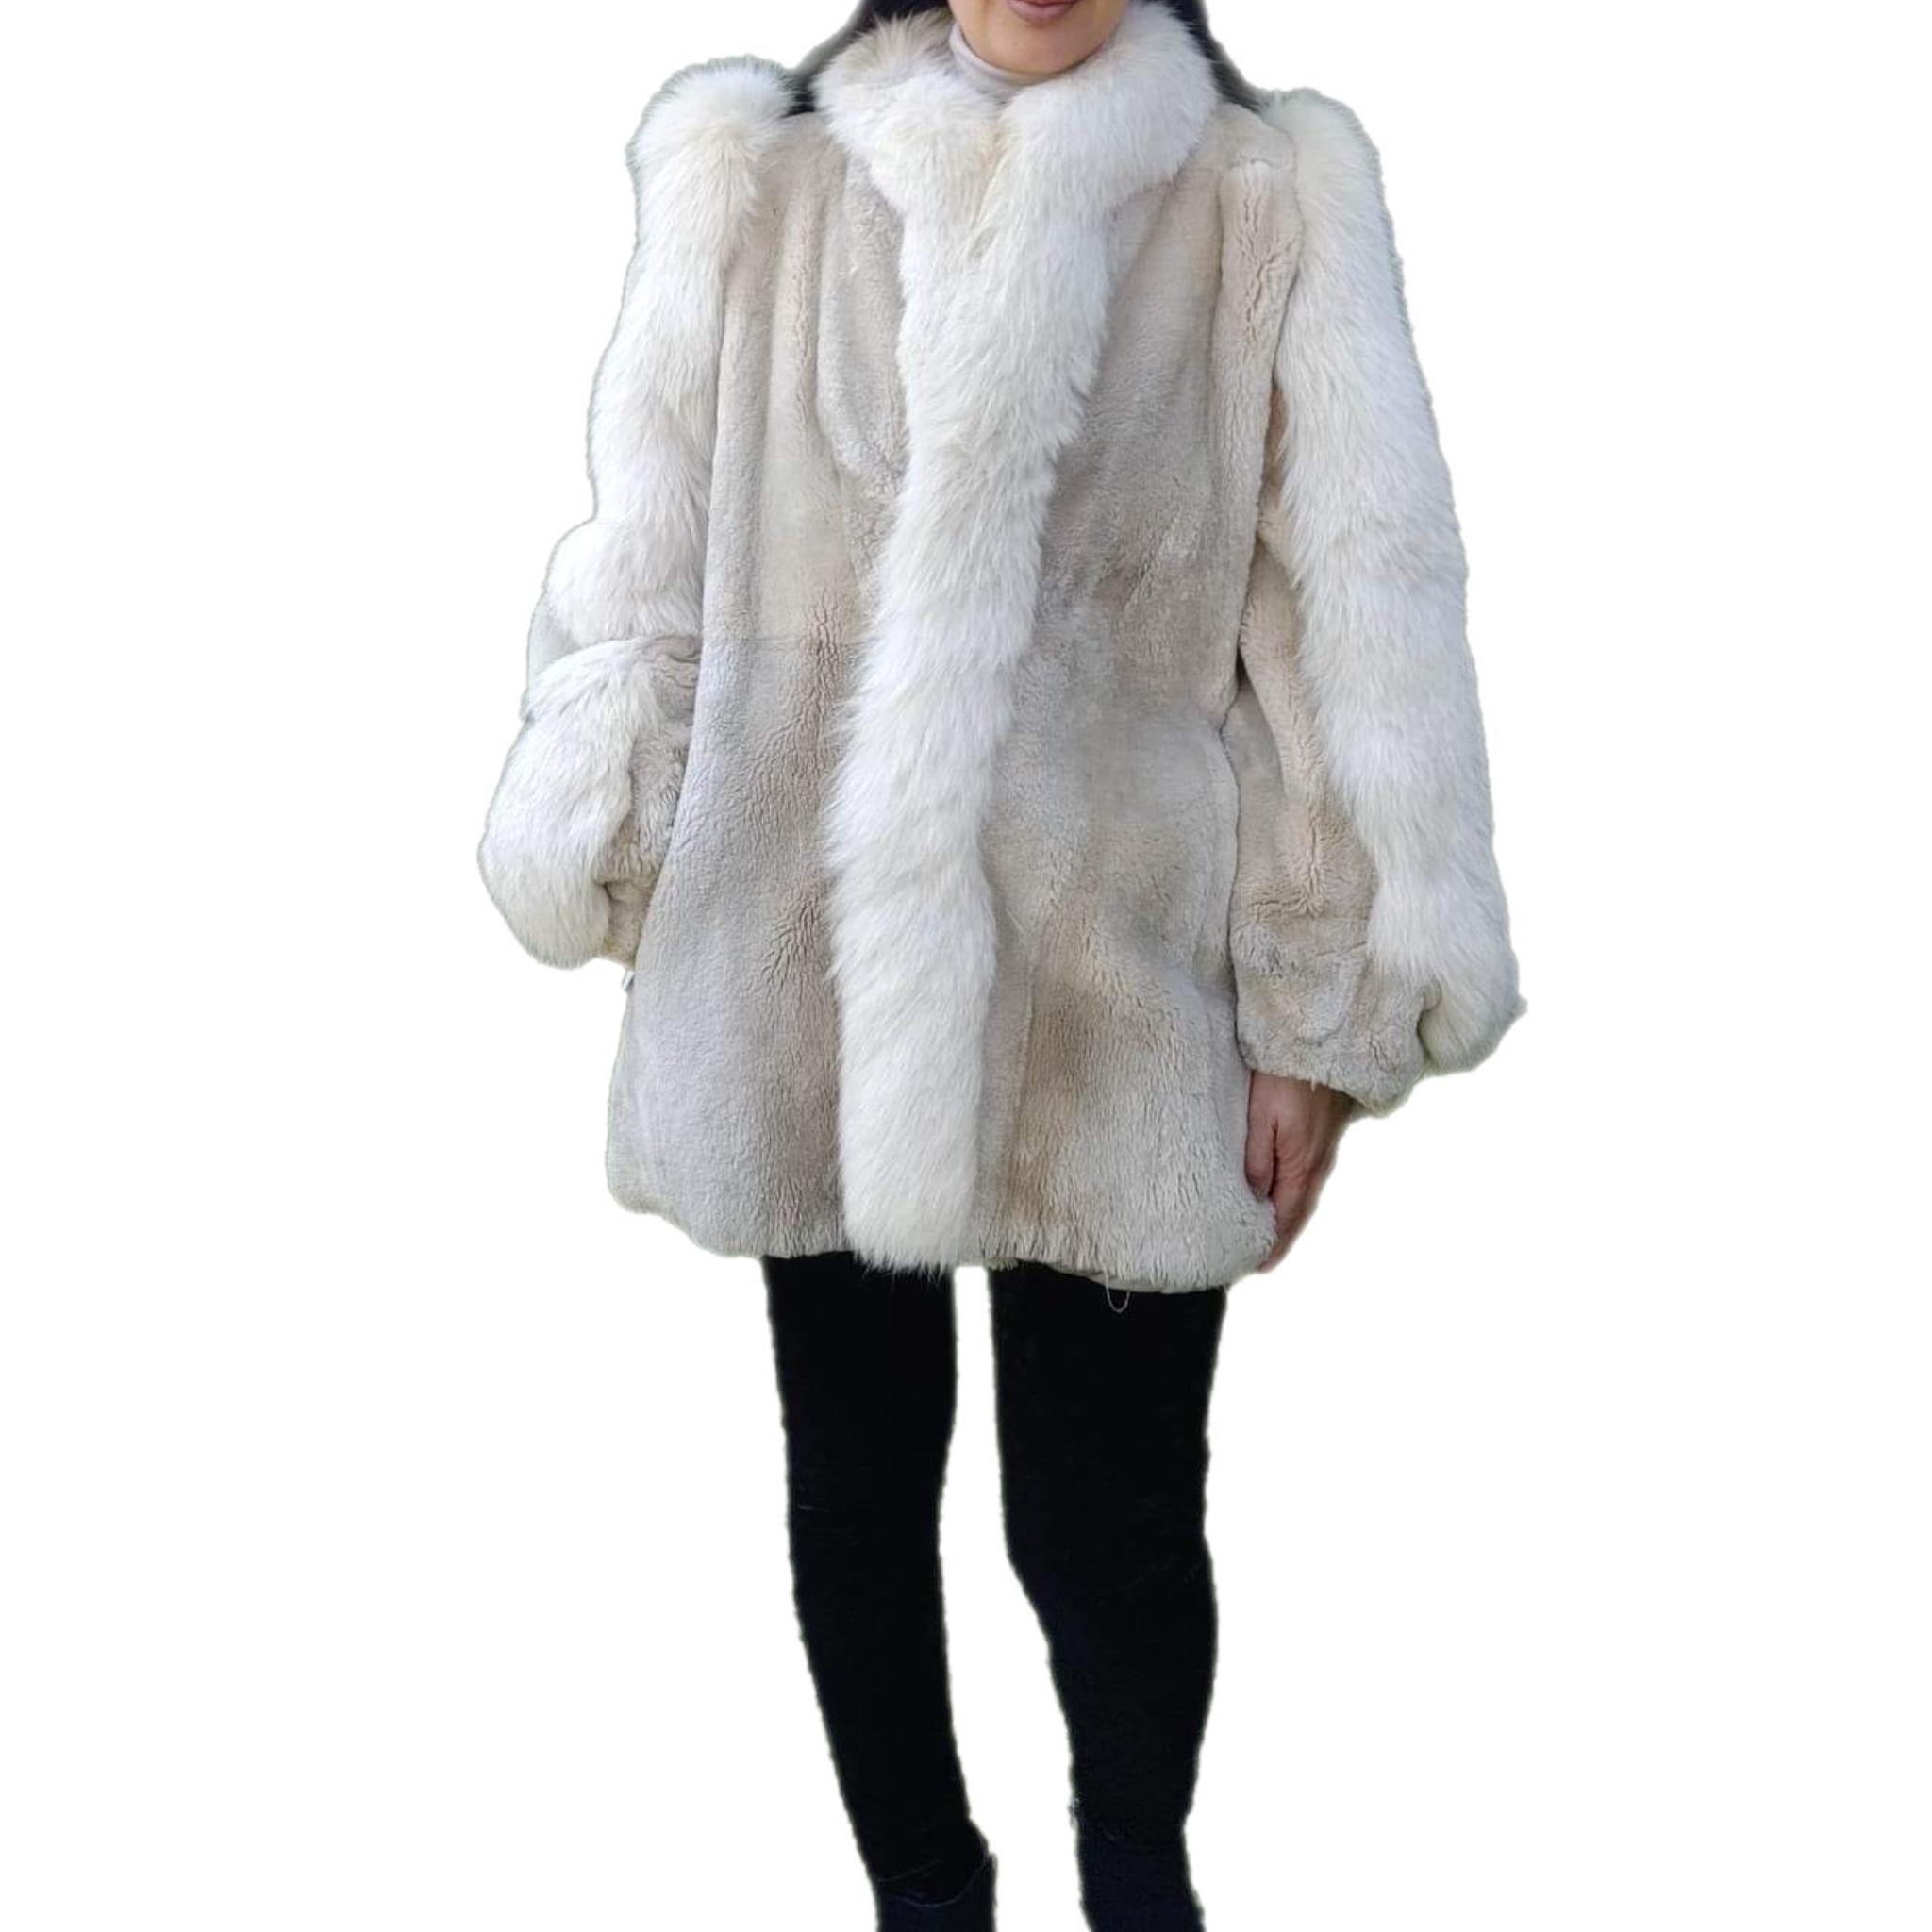 Sheared Beaver Fur Coat with Fur Trim (Size 8-M)